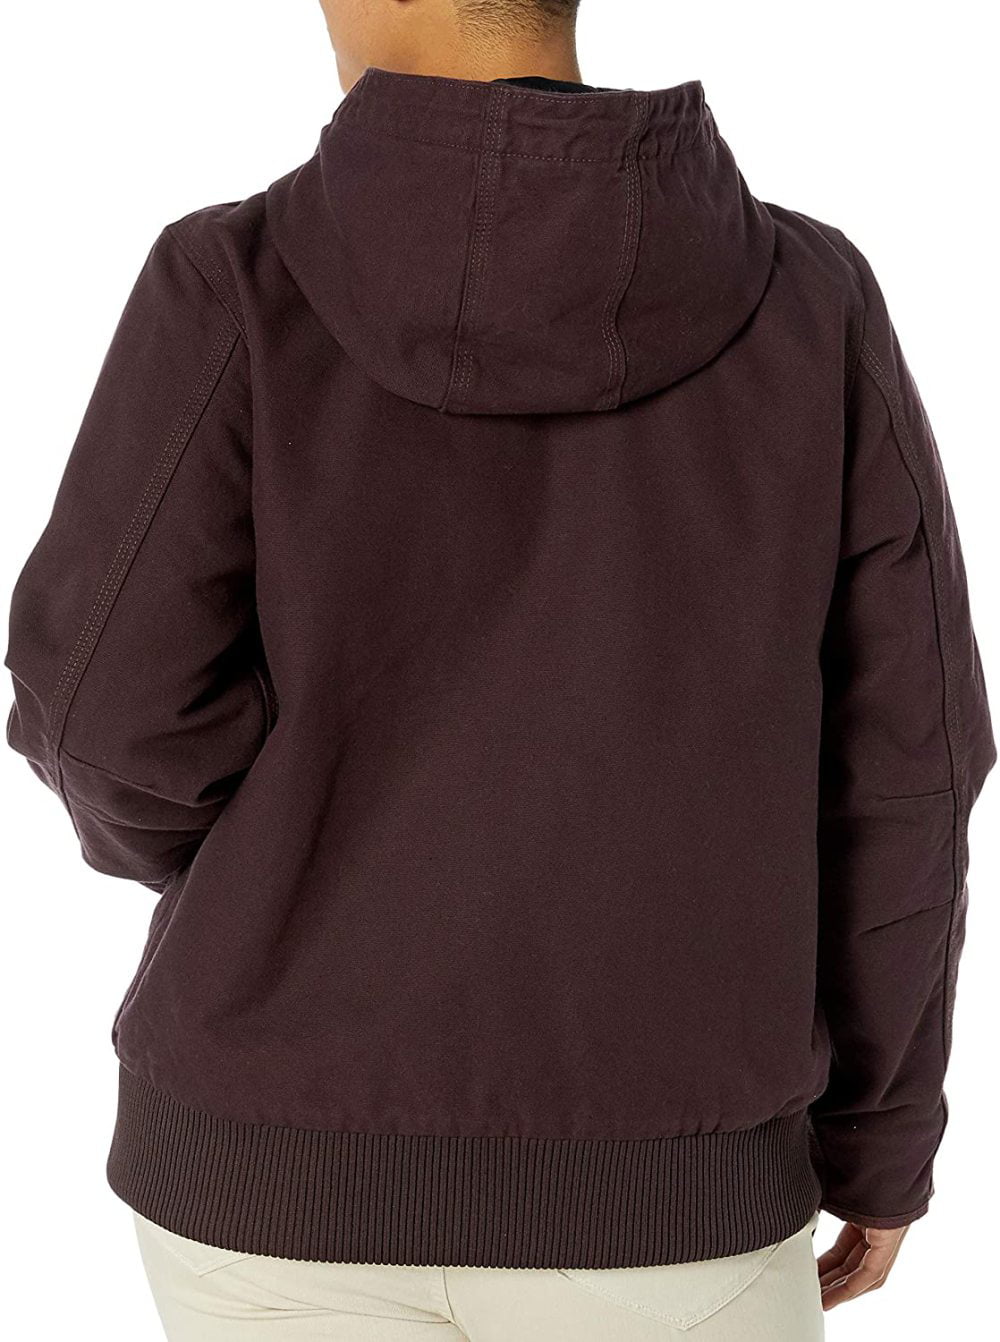 Carhartt Women's Active Jacket Wj130 Plus Size 